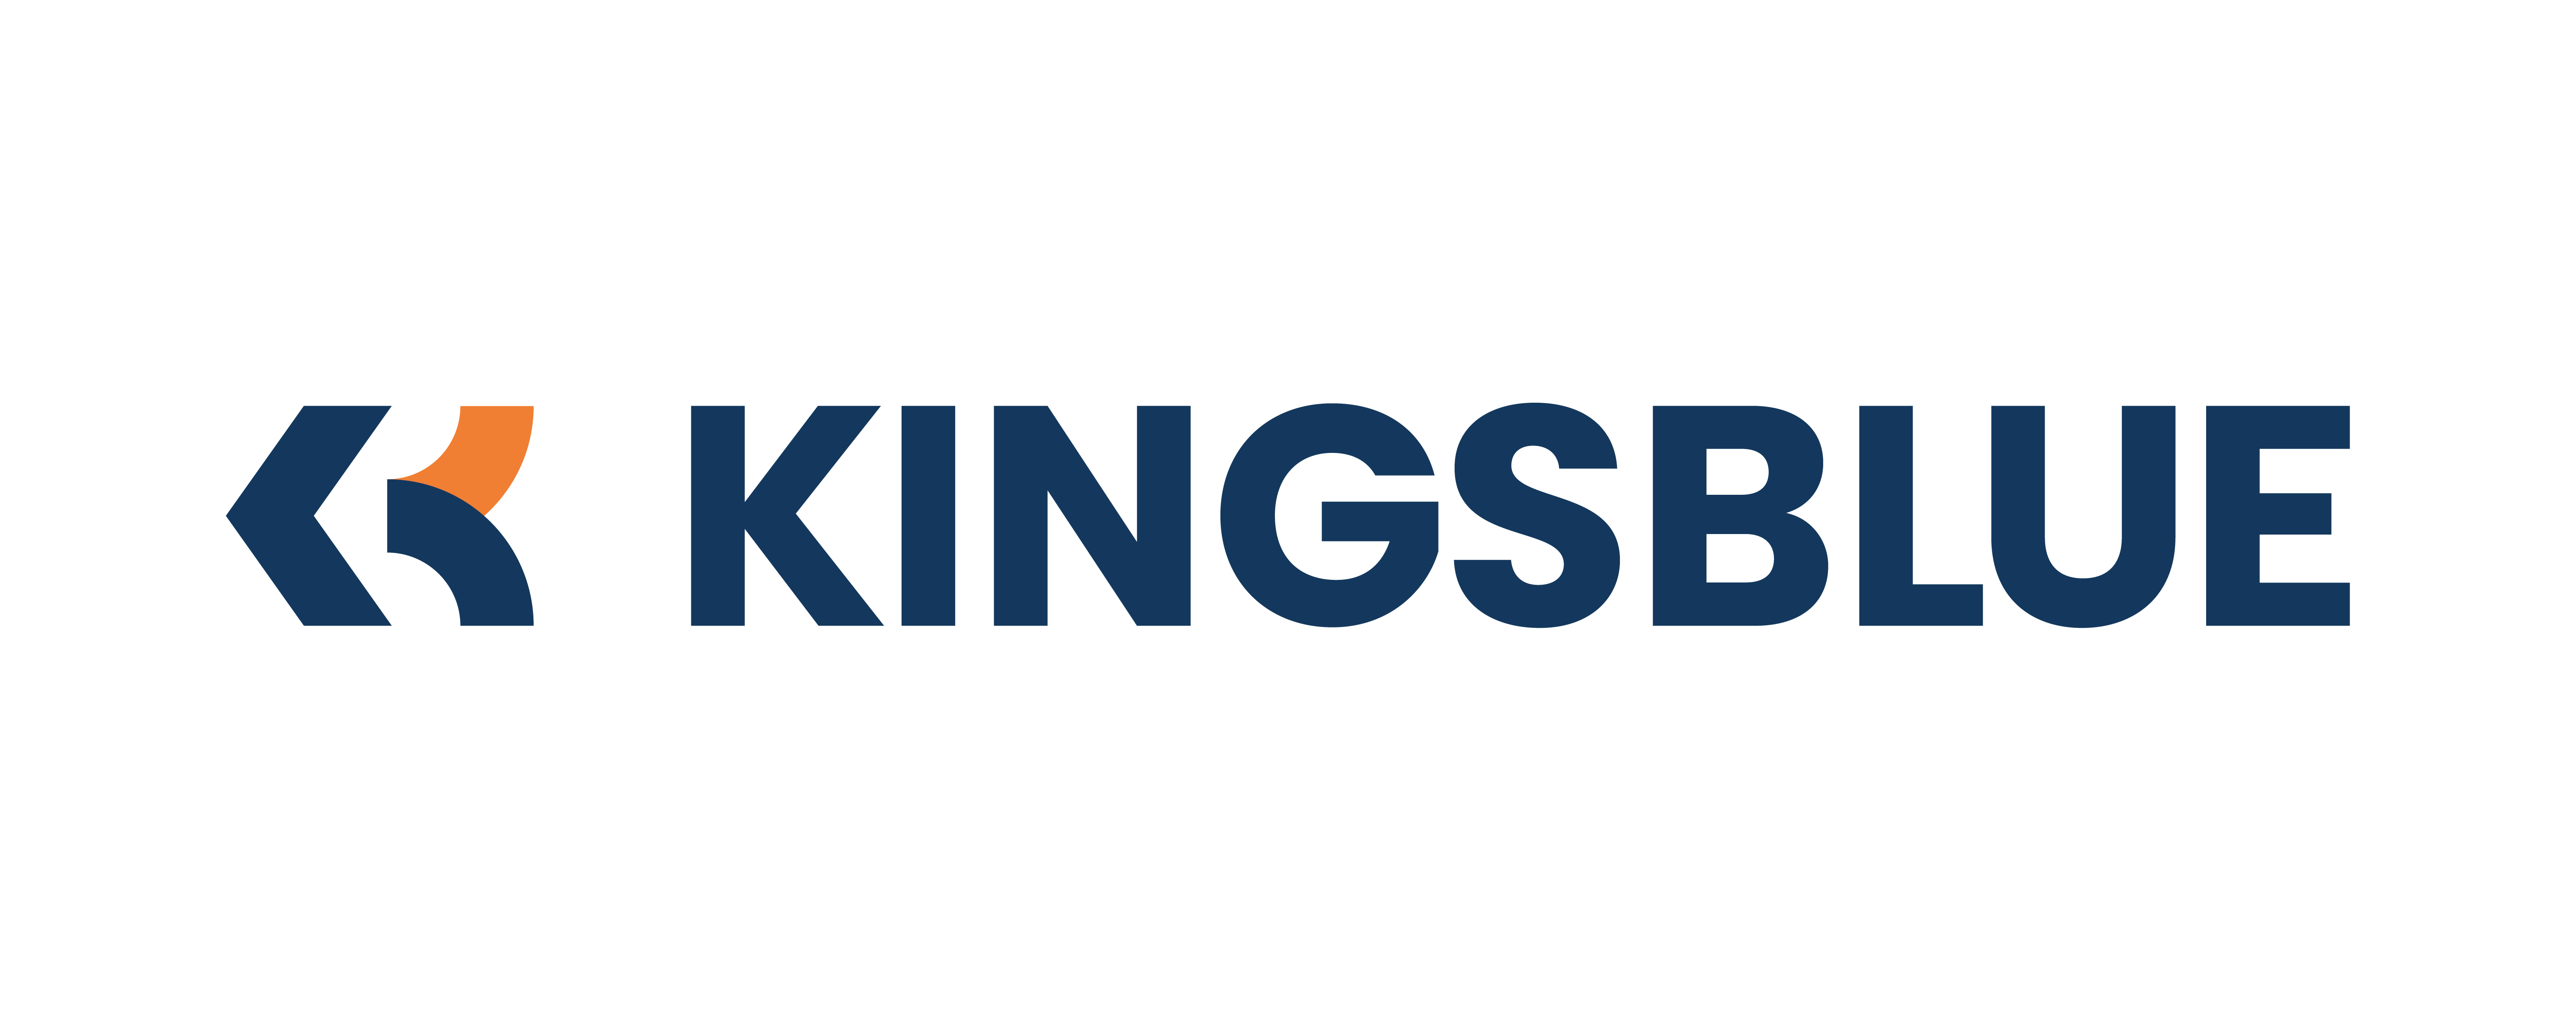 kingsblue - clean asset data 